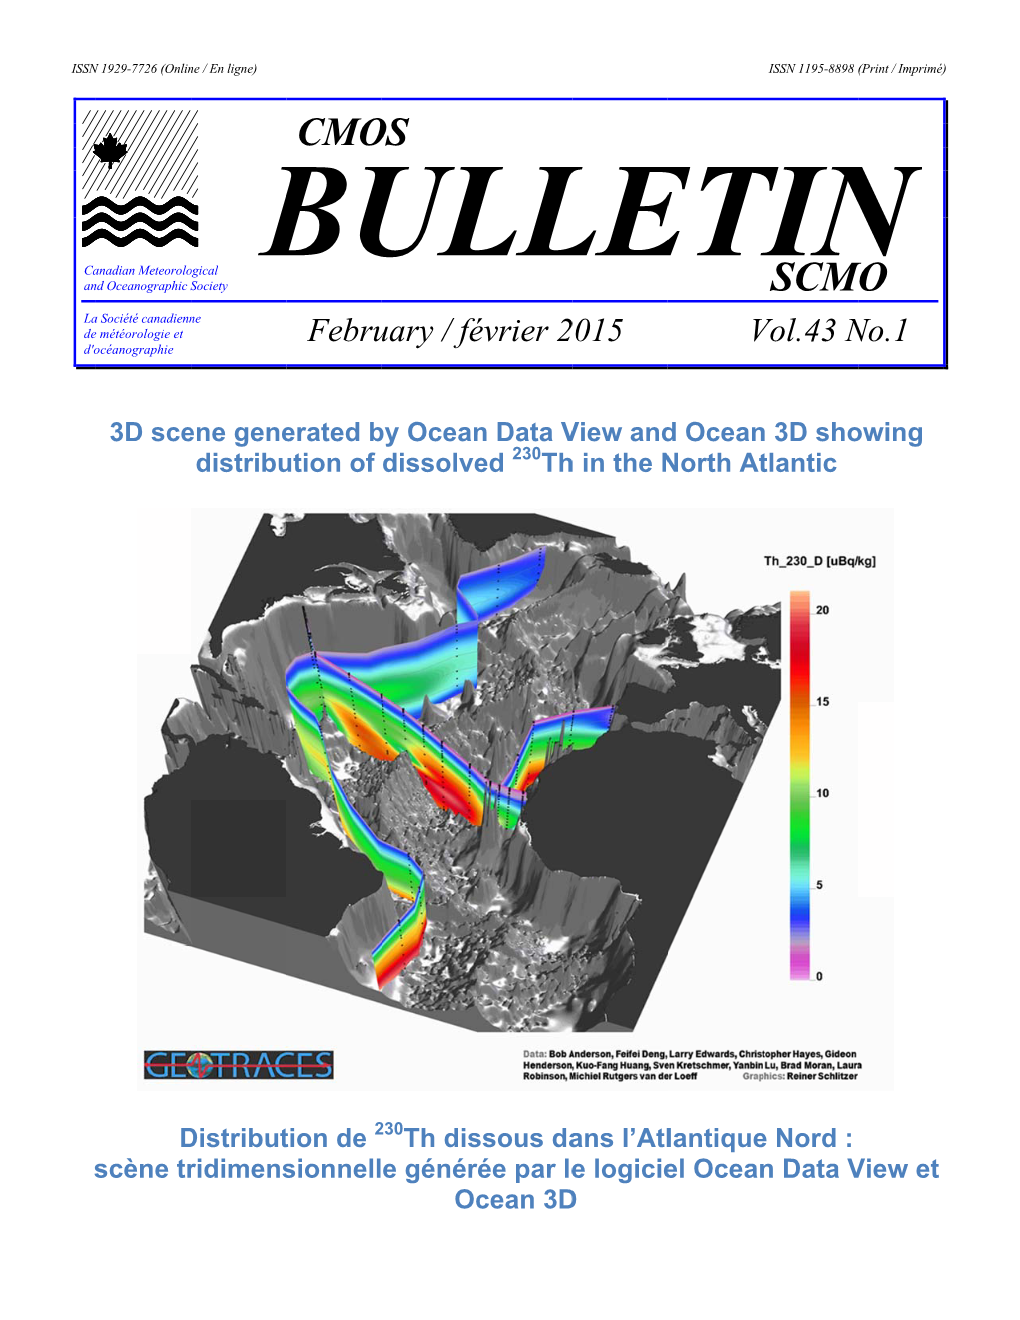 CMOS Bulletin SCMO Volume 43 No. 1 February 2015